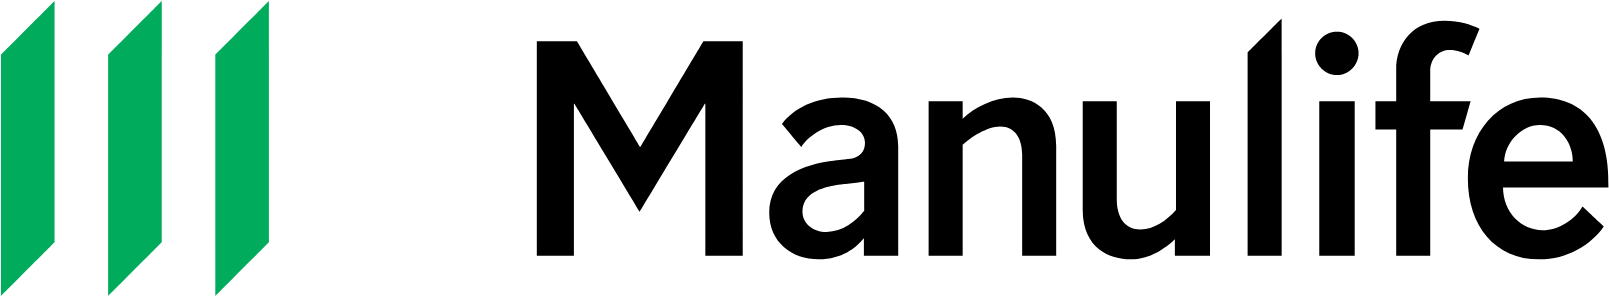 Manulife Financial logo large (transparent PNG)